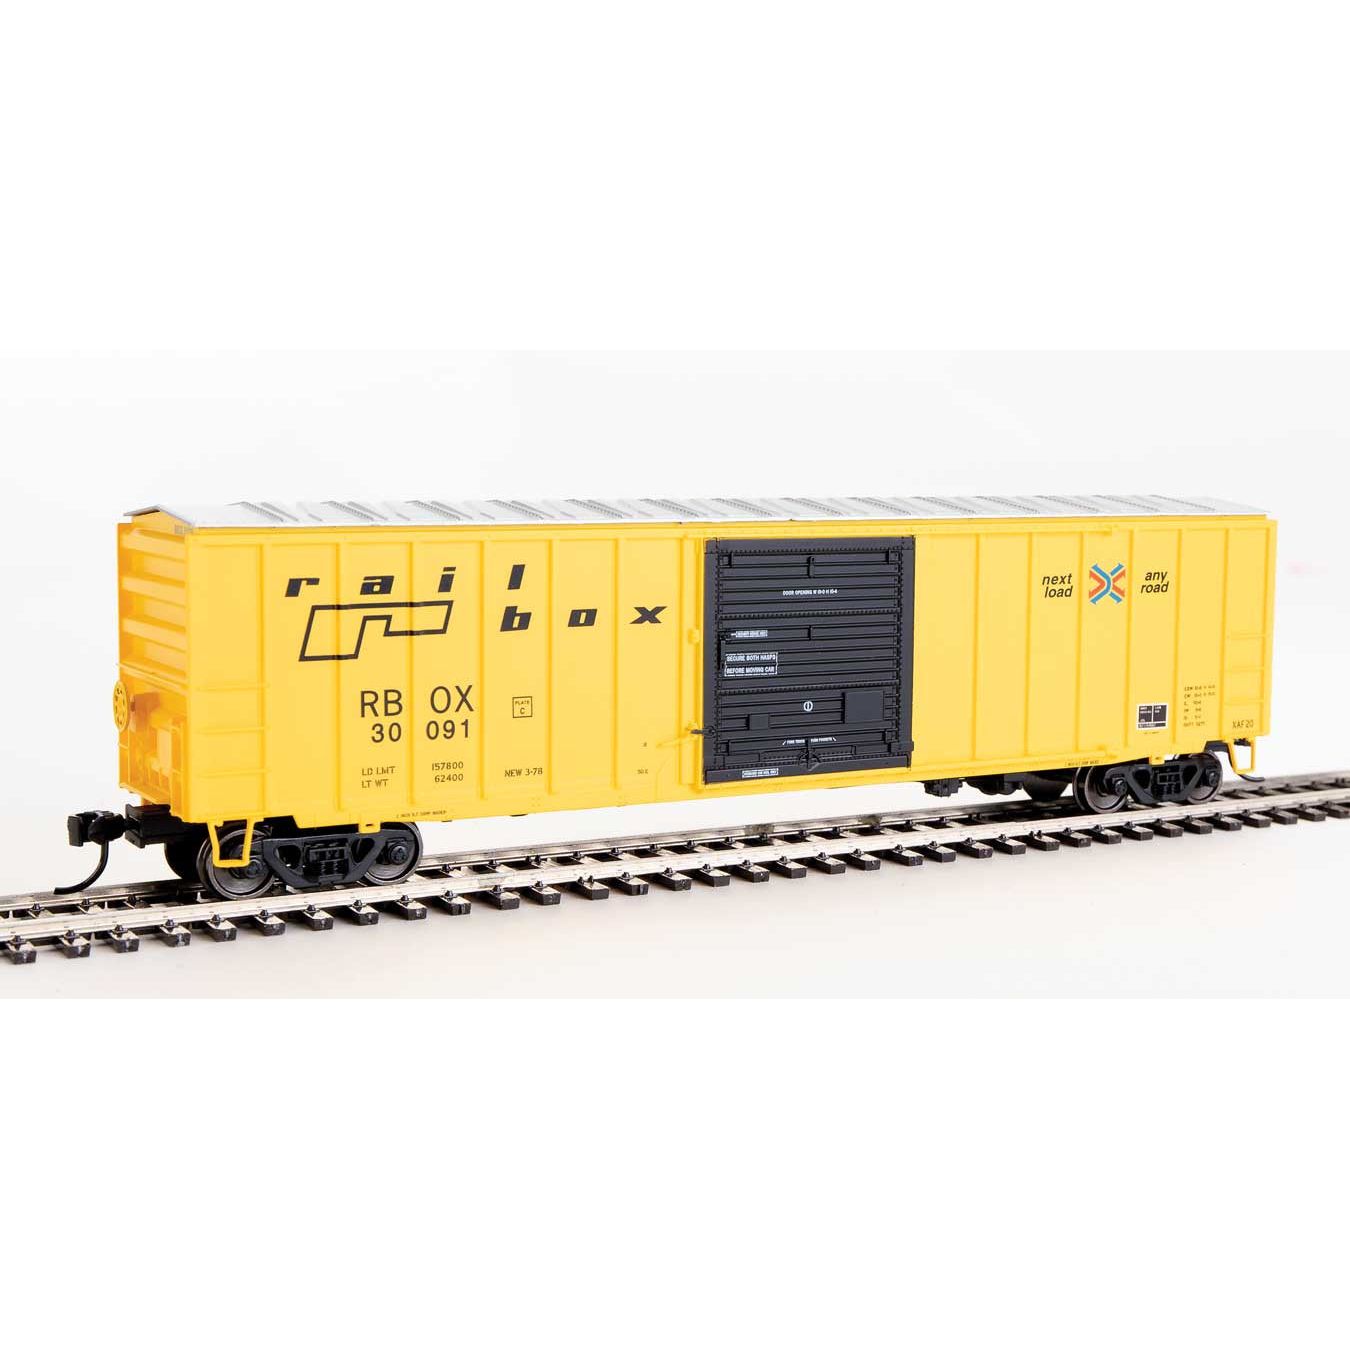 50' ACF Exterior Post Boxcar - Railbox #30091 (yellow, black door; small logo, slogan) (HO) #1864 by Walthers